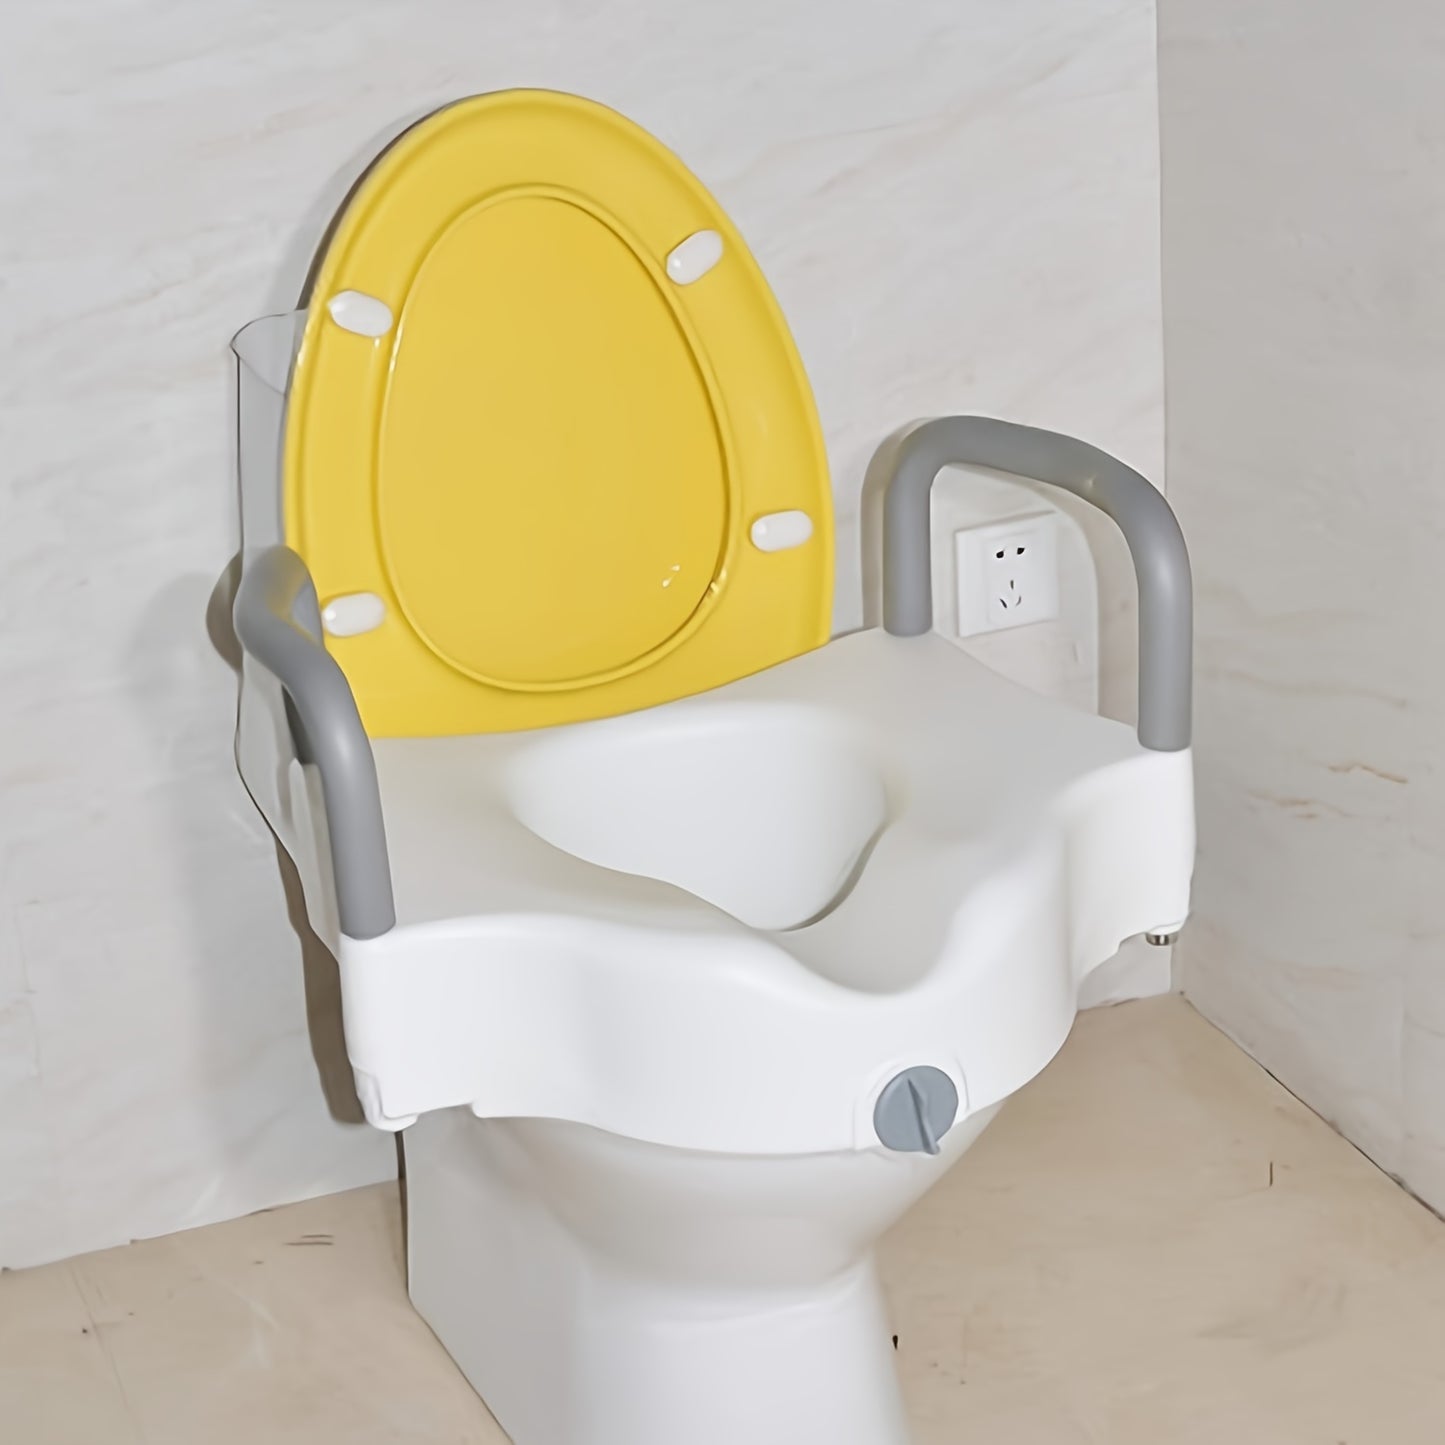 Toilet Seat Risers